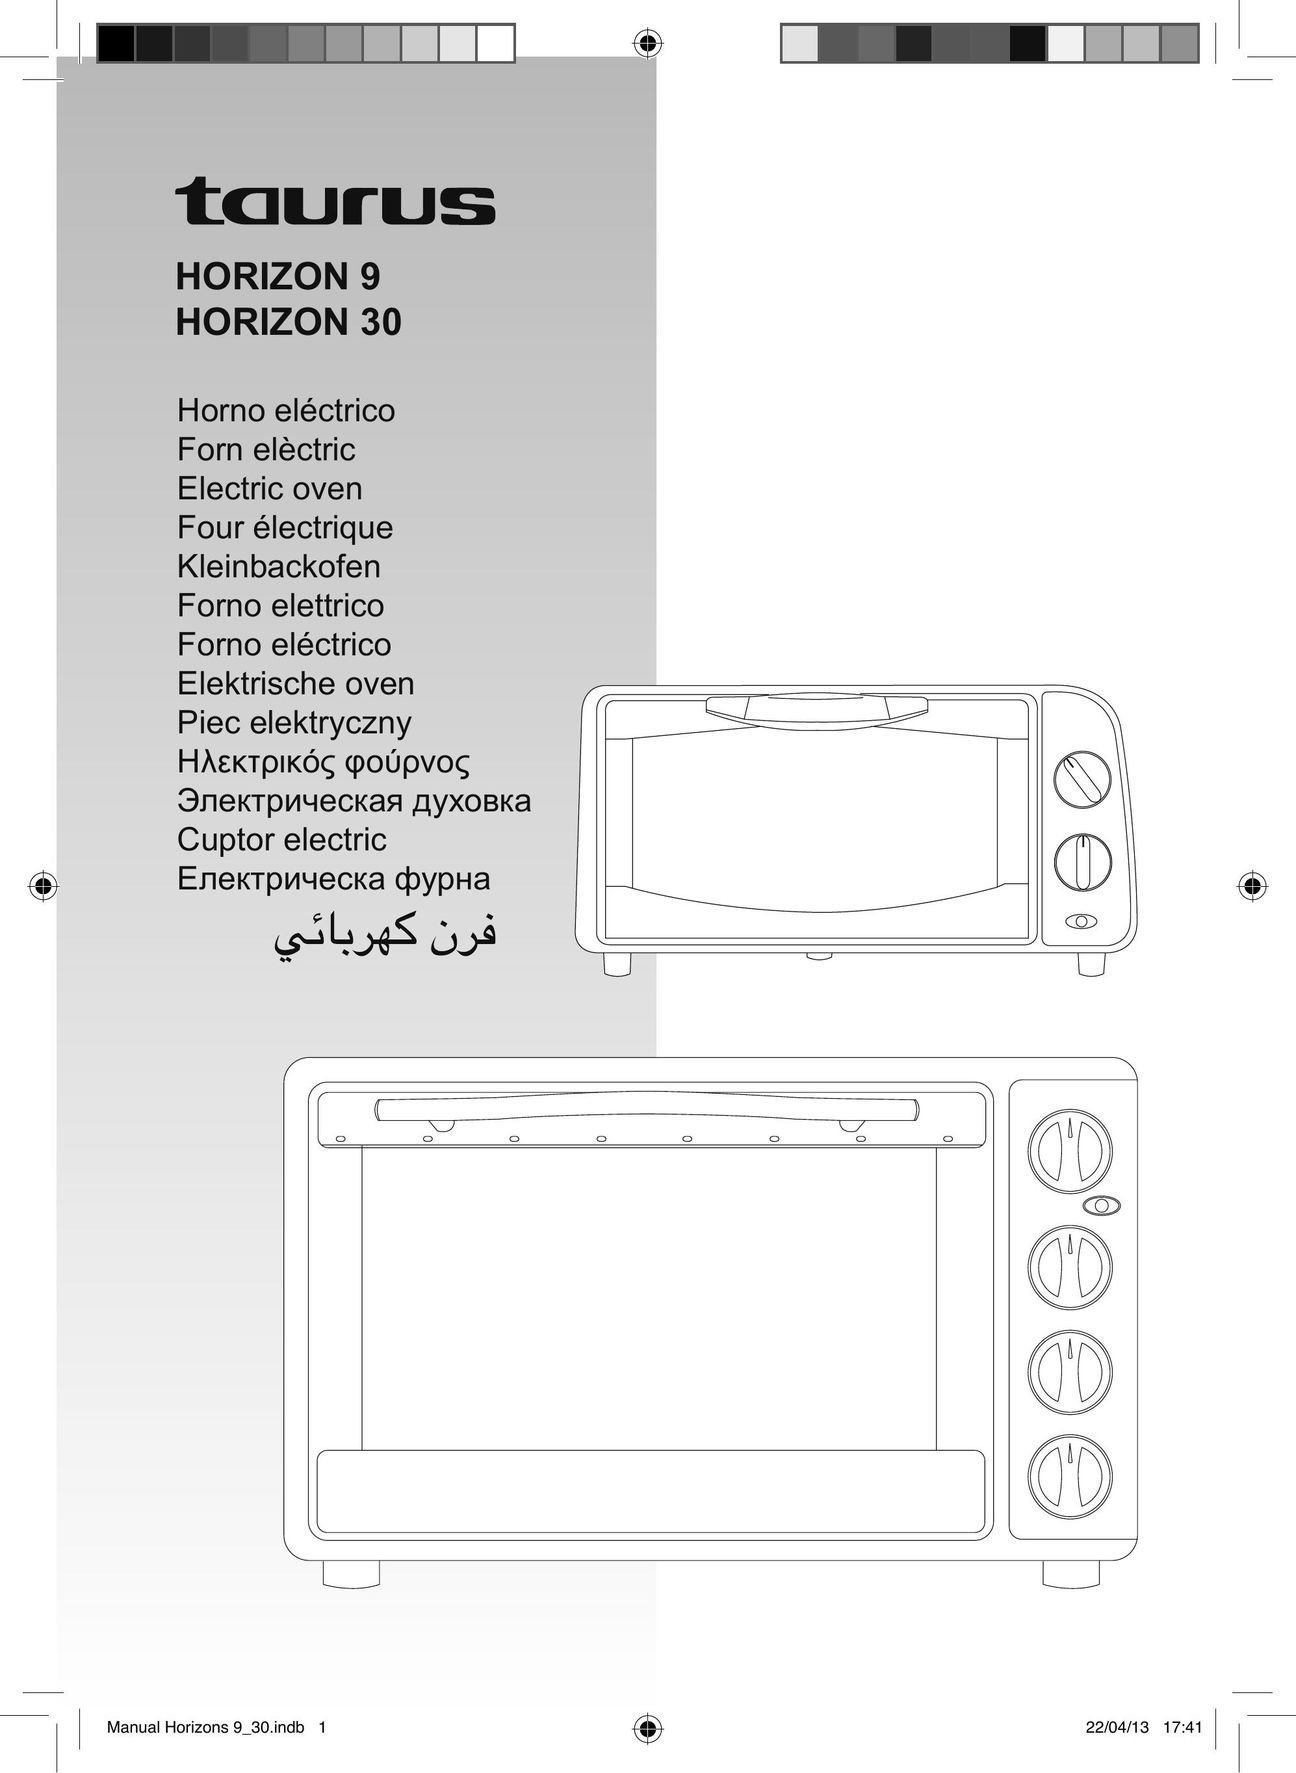 Taurus Group HORIZON 9 Oven User Manual